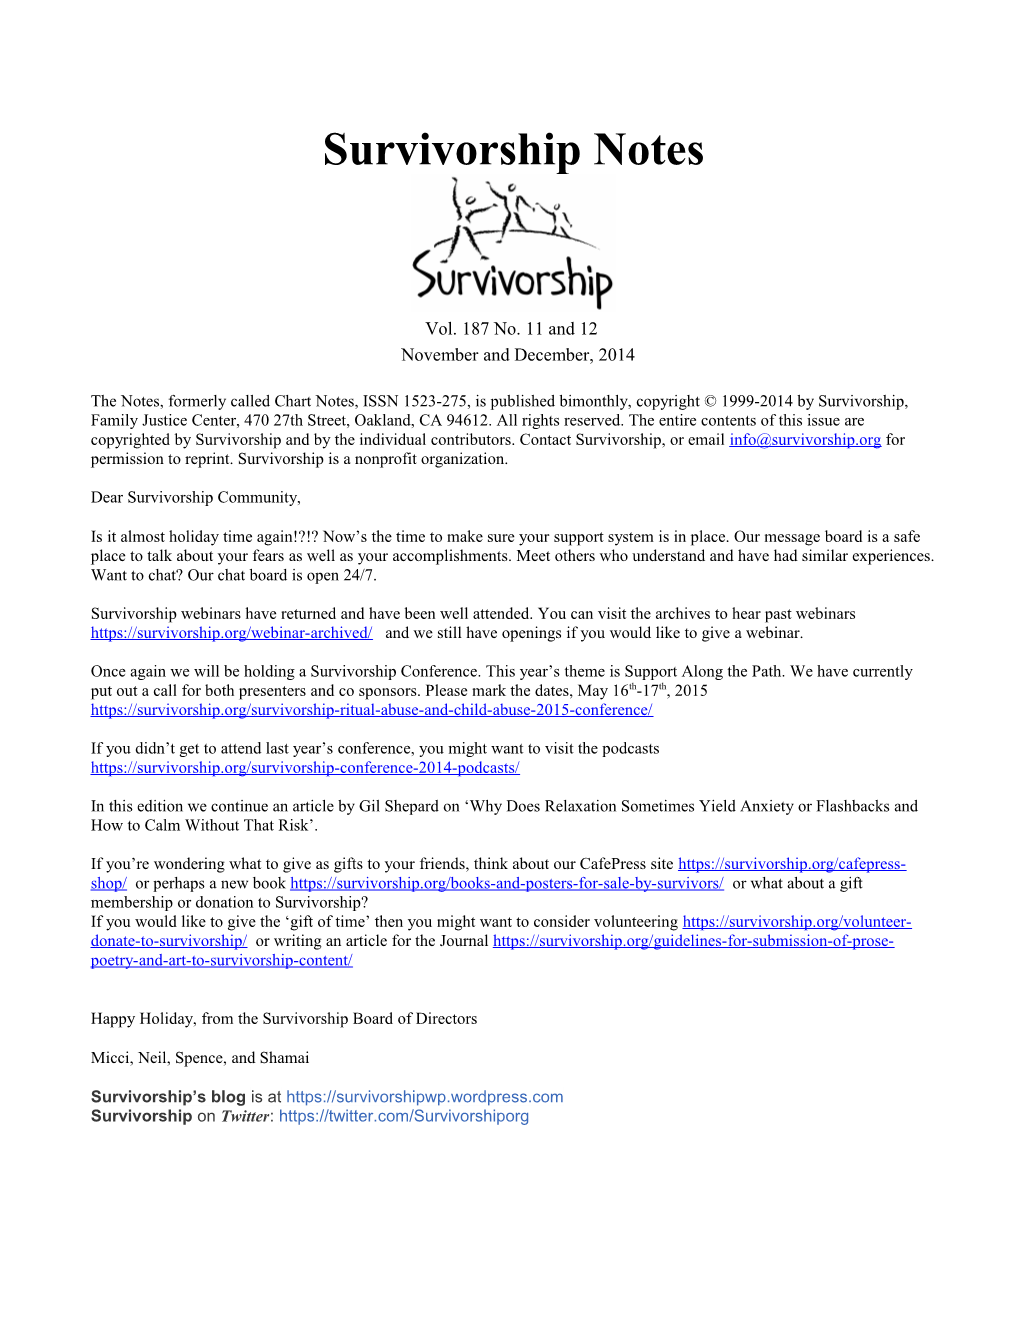 Survivorship Notes s1